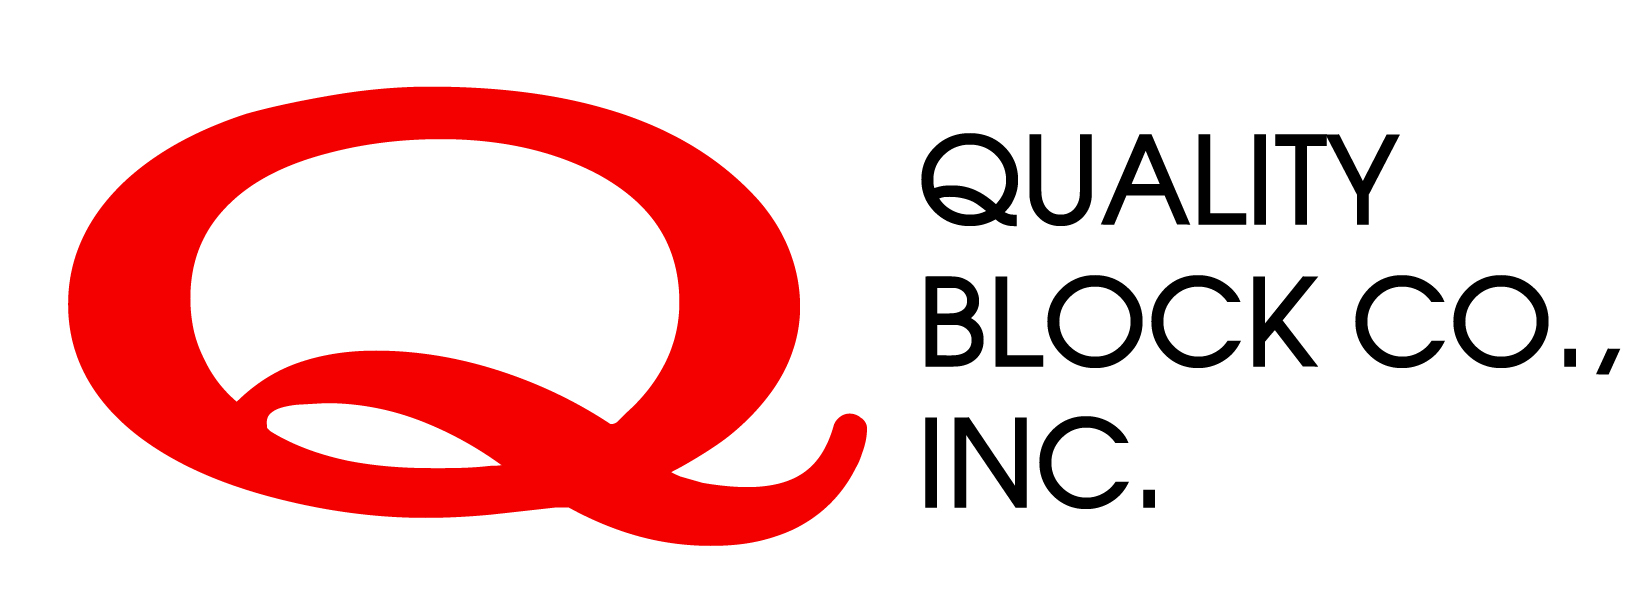 Quality Block Co., Inc.